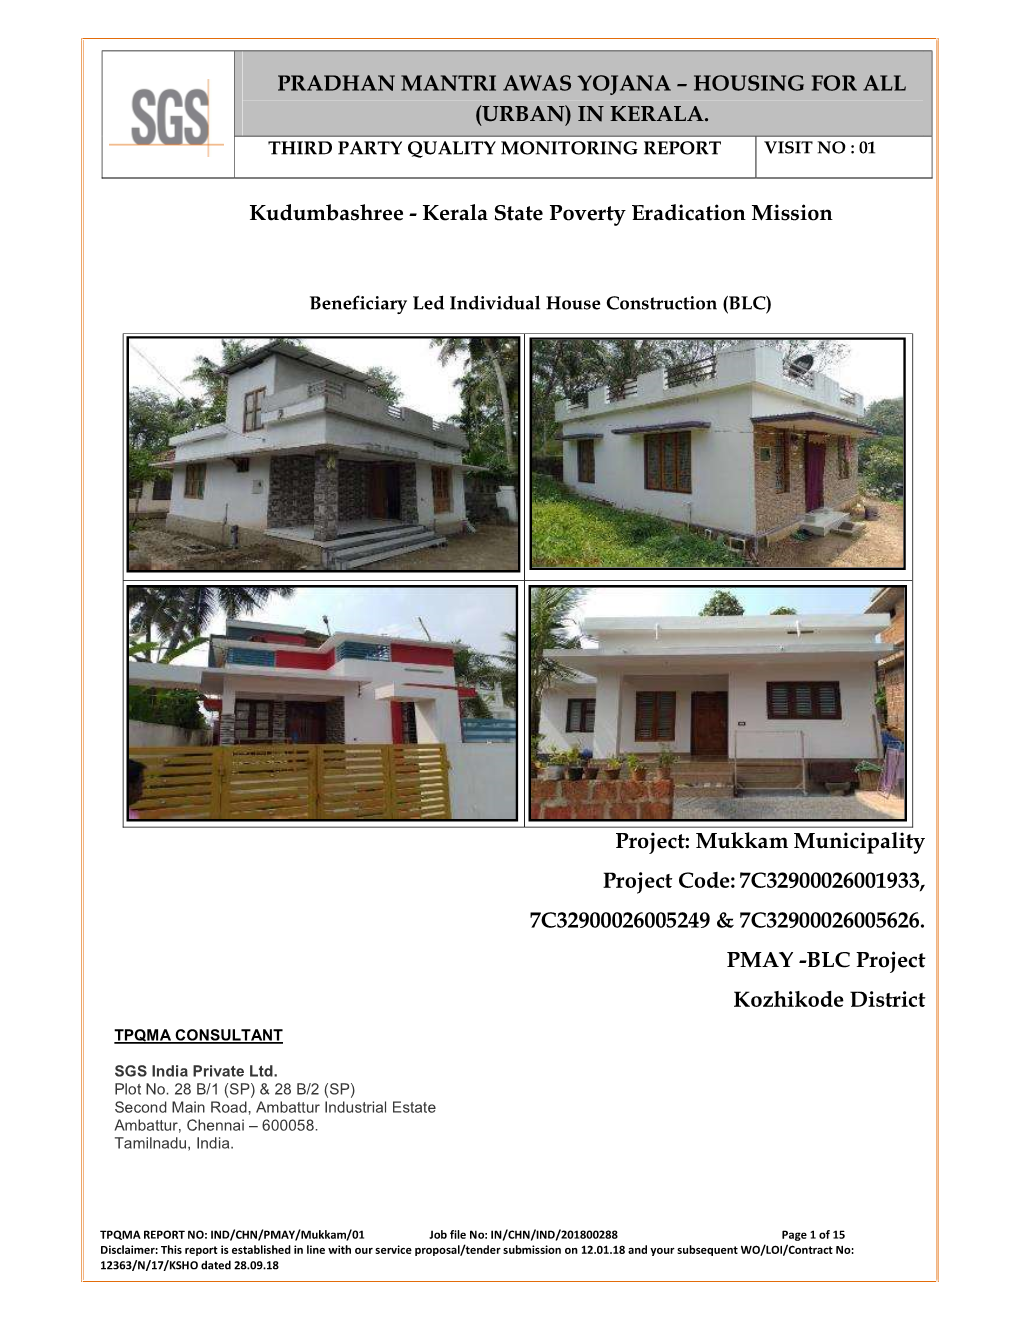 PRADHAN MANTRI AWAS YOJANA – HOUSING for ALL (URBAN) in KERALA. Kudumbashree